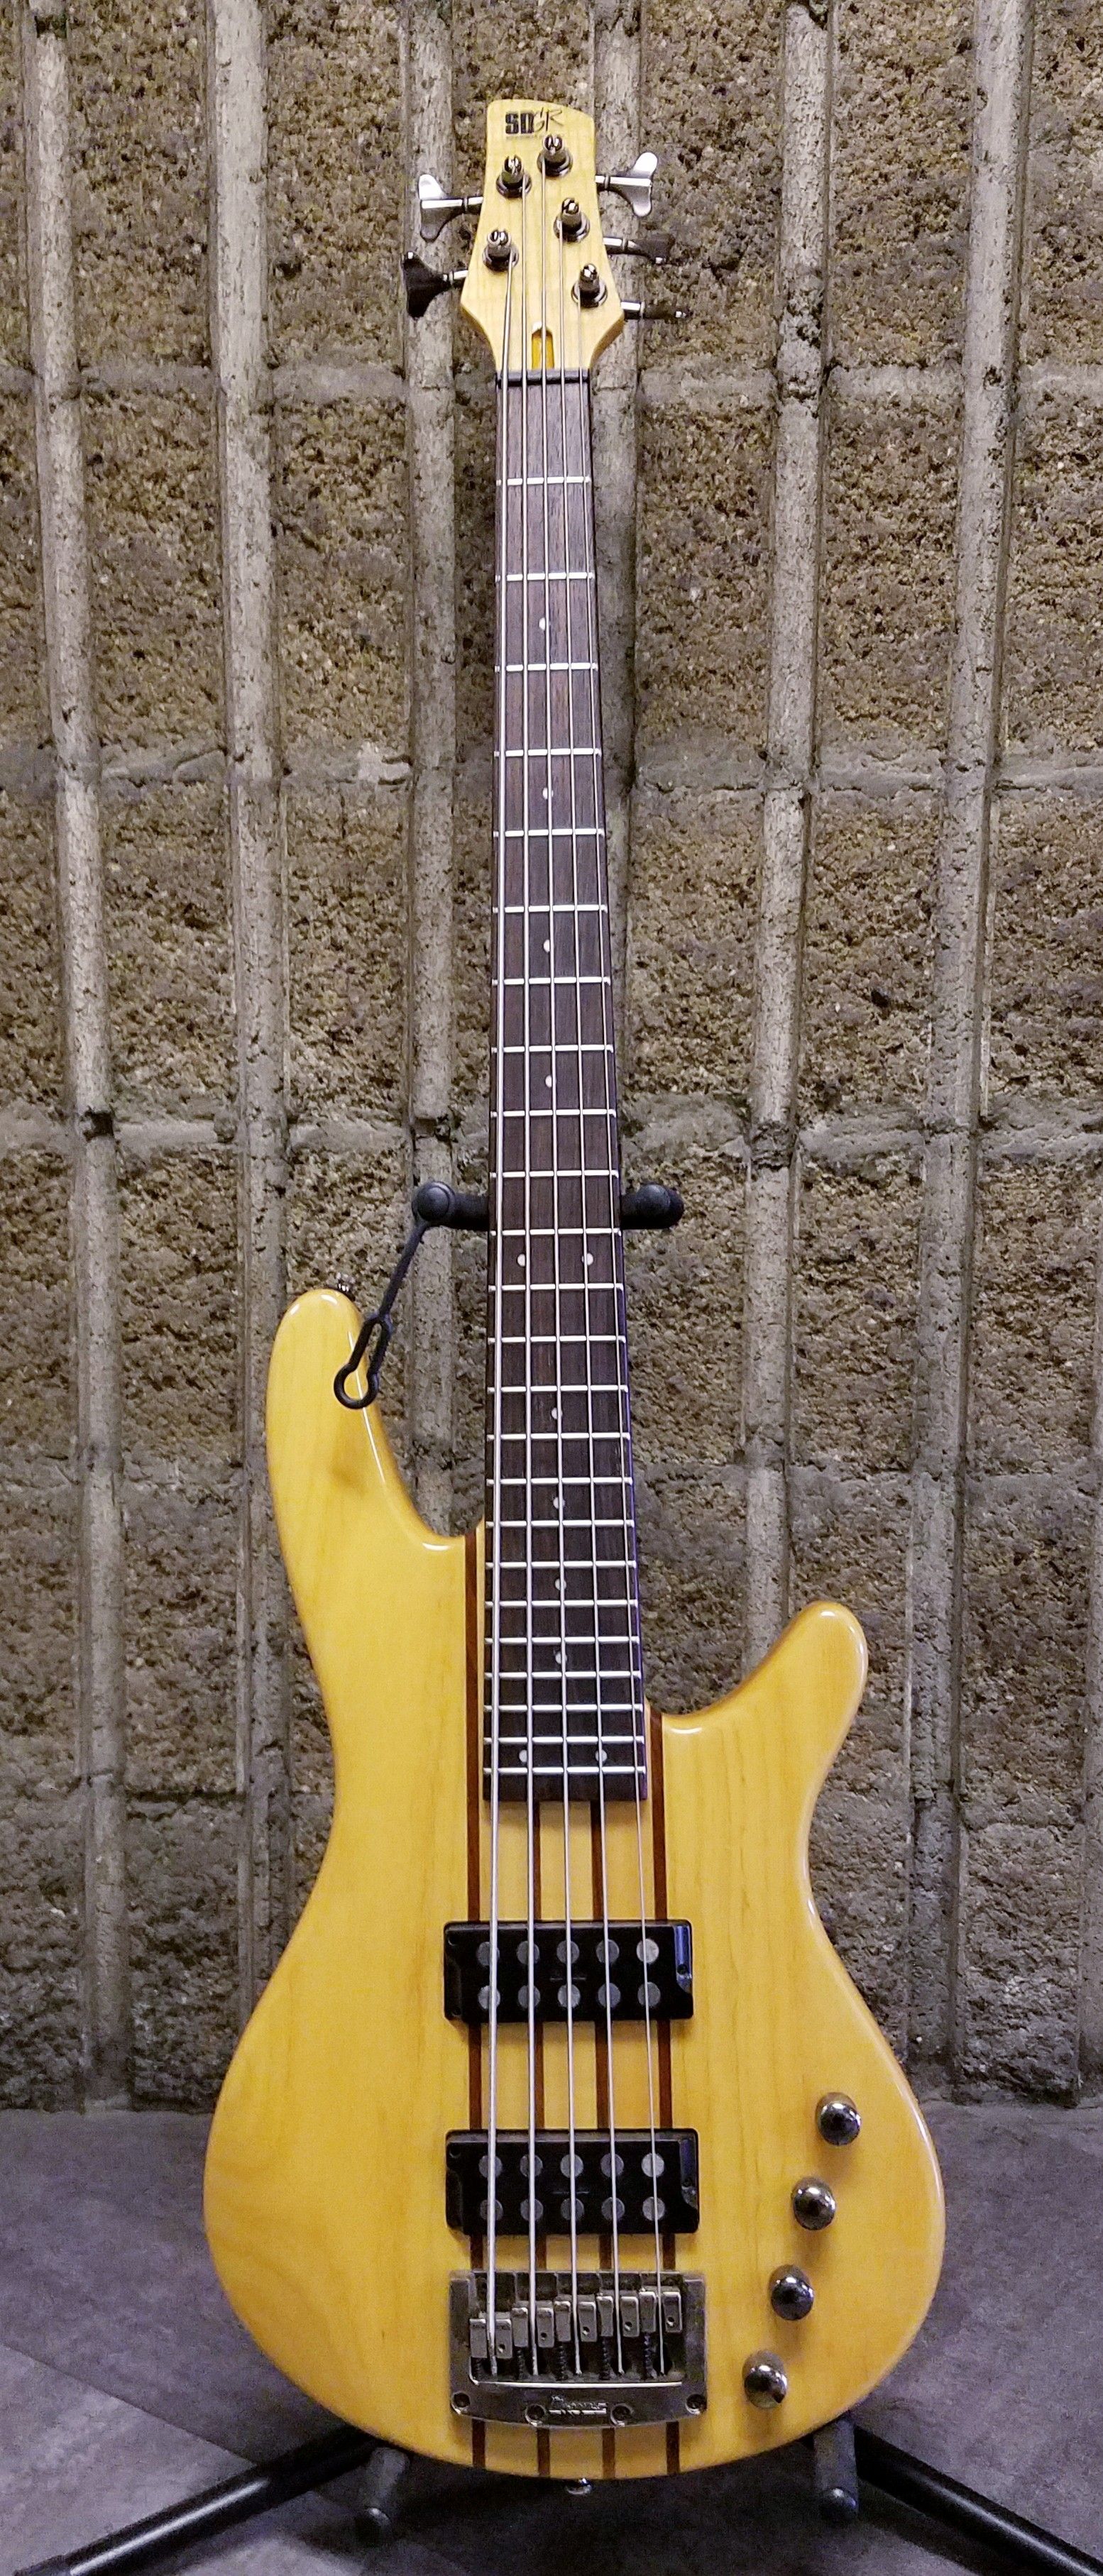 Ibanez SRX 705 - SDGR - 5 String Bass Guitar. Professionally Set Up- Action/Intonation - Excellent